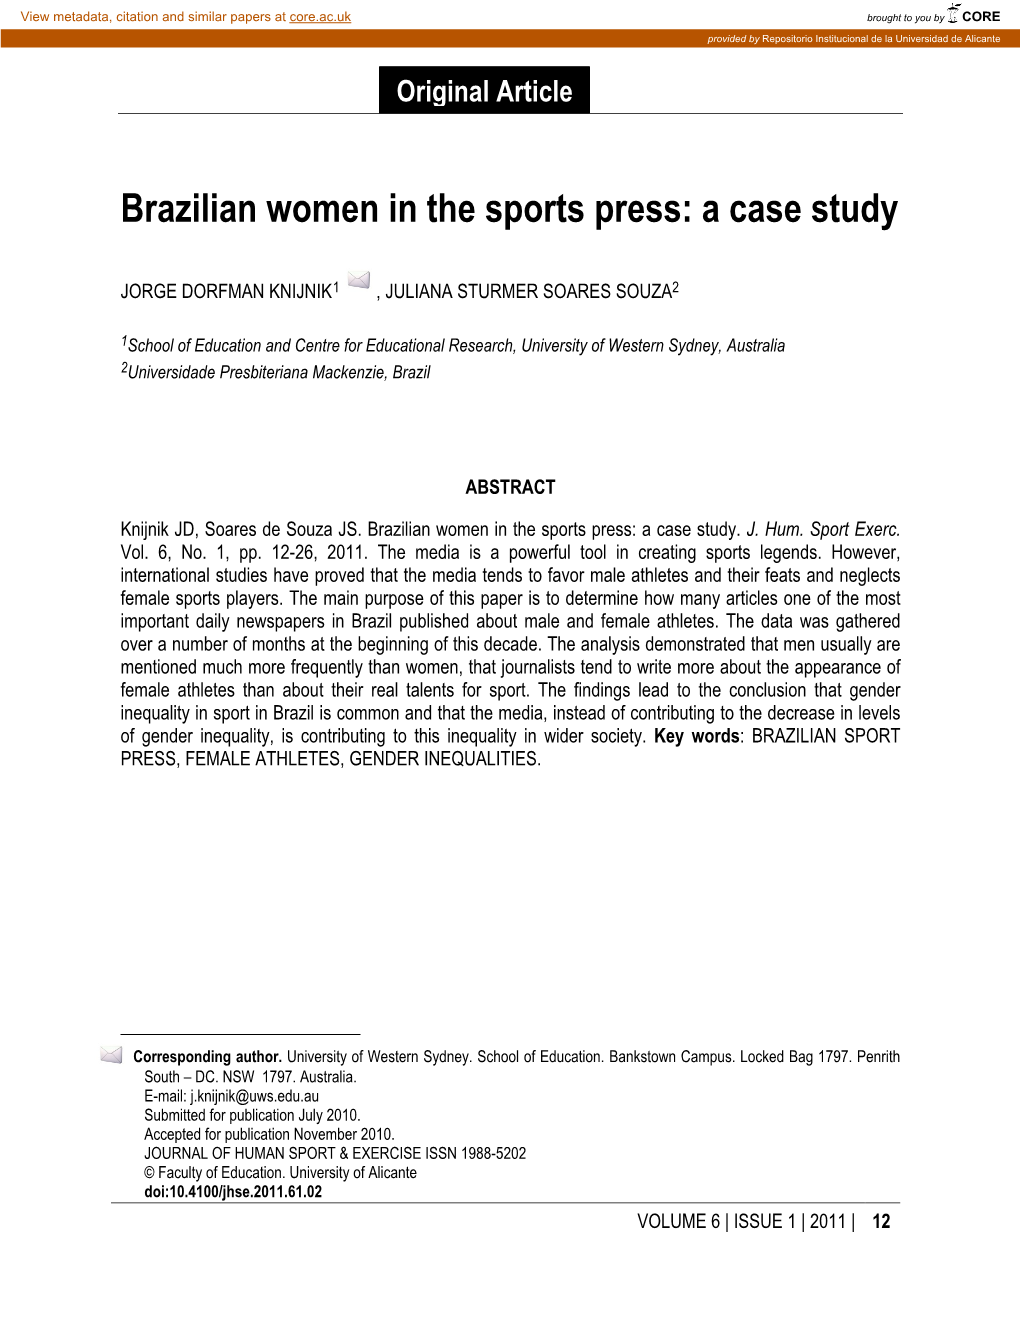 Brazilian Women in the Sports Press: a Case Study